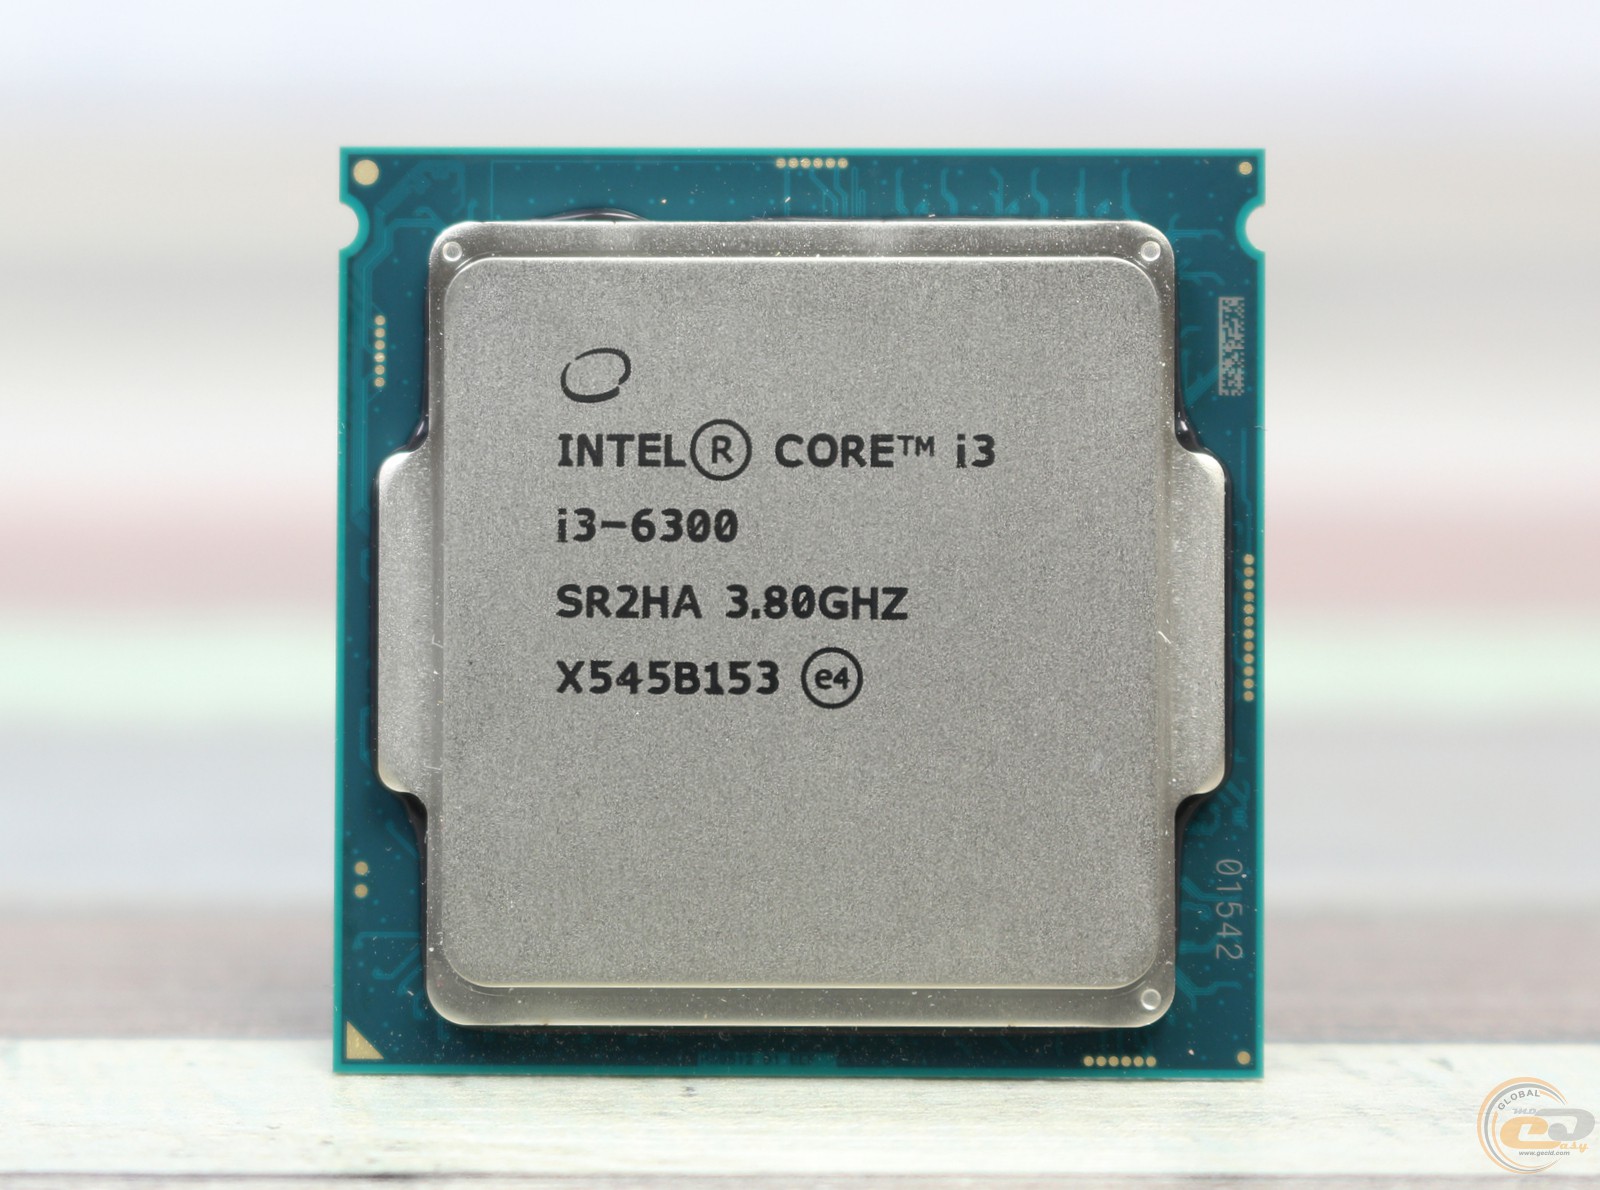 Intel r core tm купить. Intel Core i3 6300. Процессор Intel Core i7-4770 Haswell. Intel Core i3-6300 3,8 ГГЦ. Процессор Интел кор ай 3.